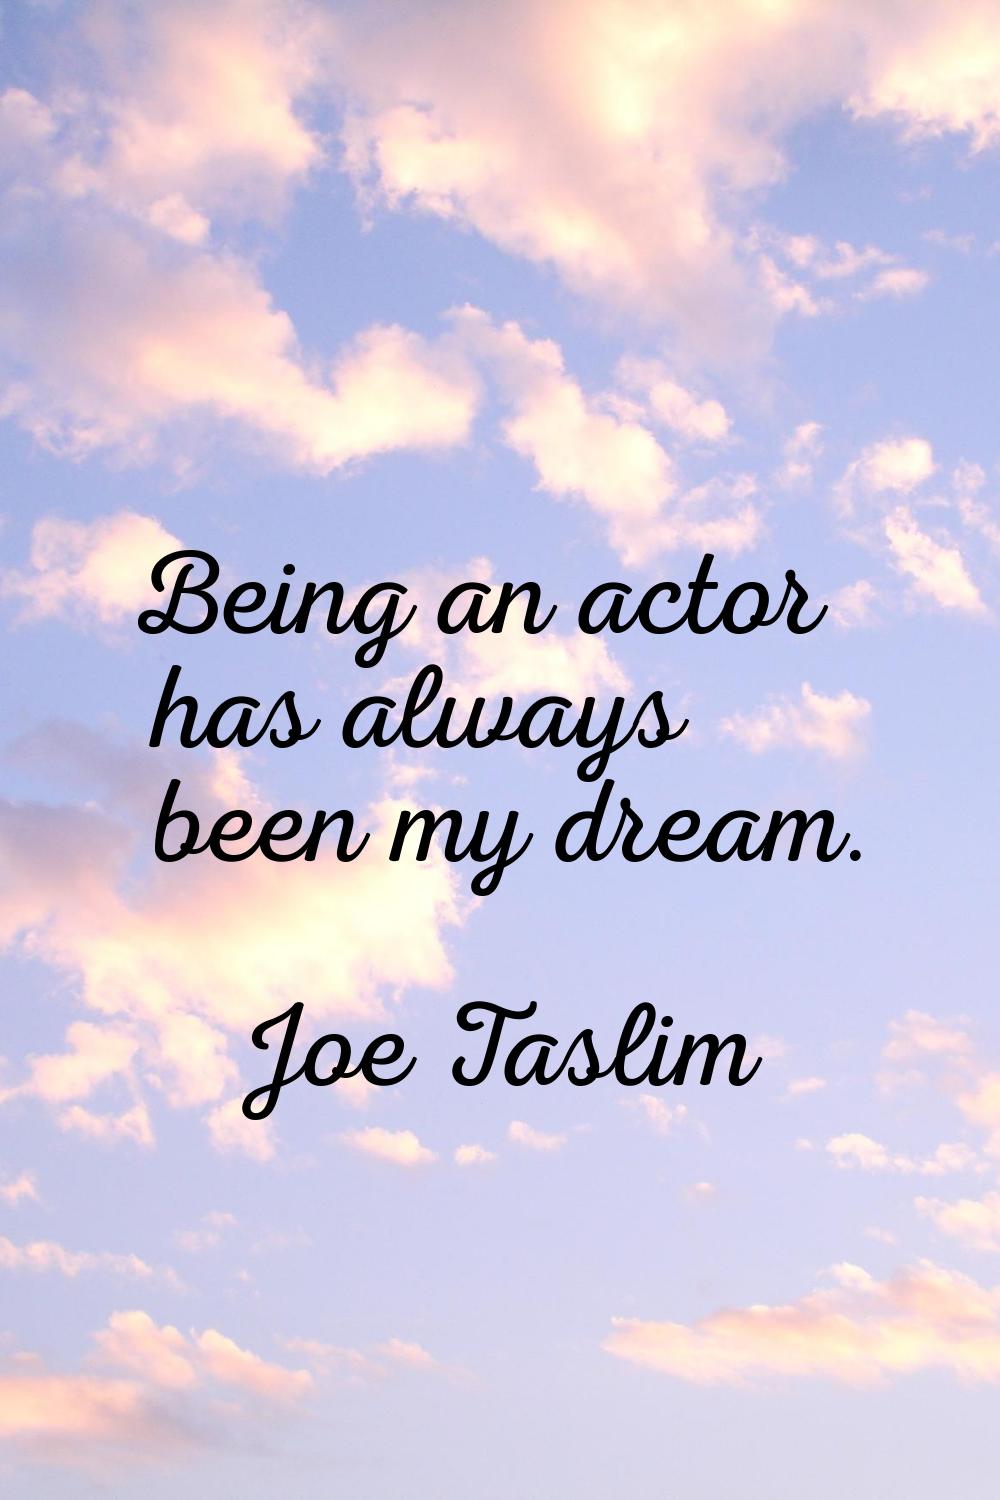 Being an actor has always been my dream.